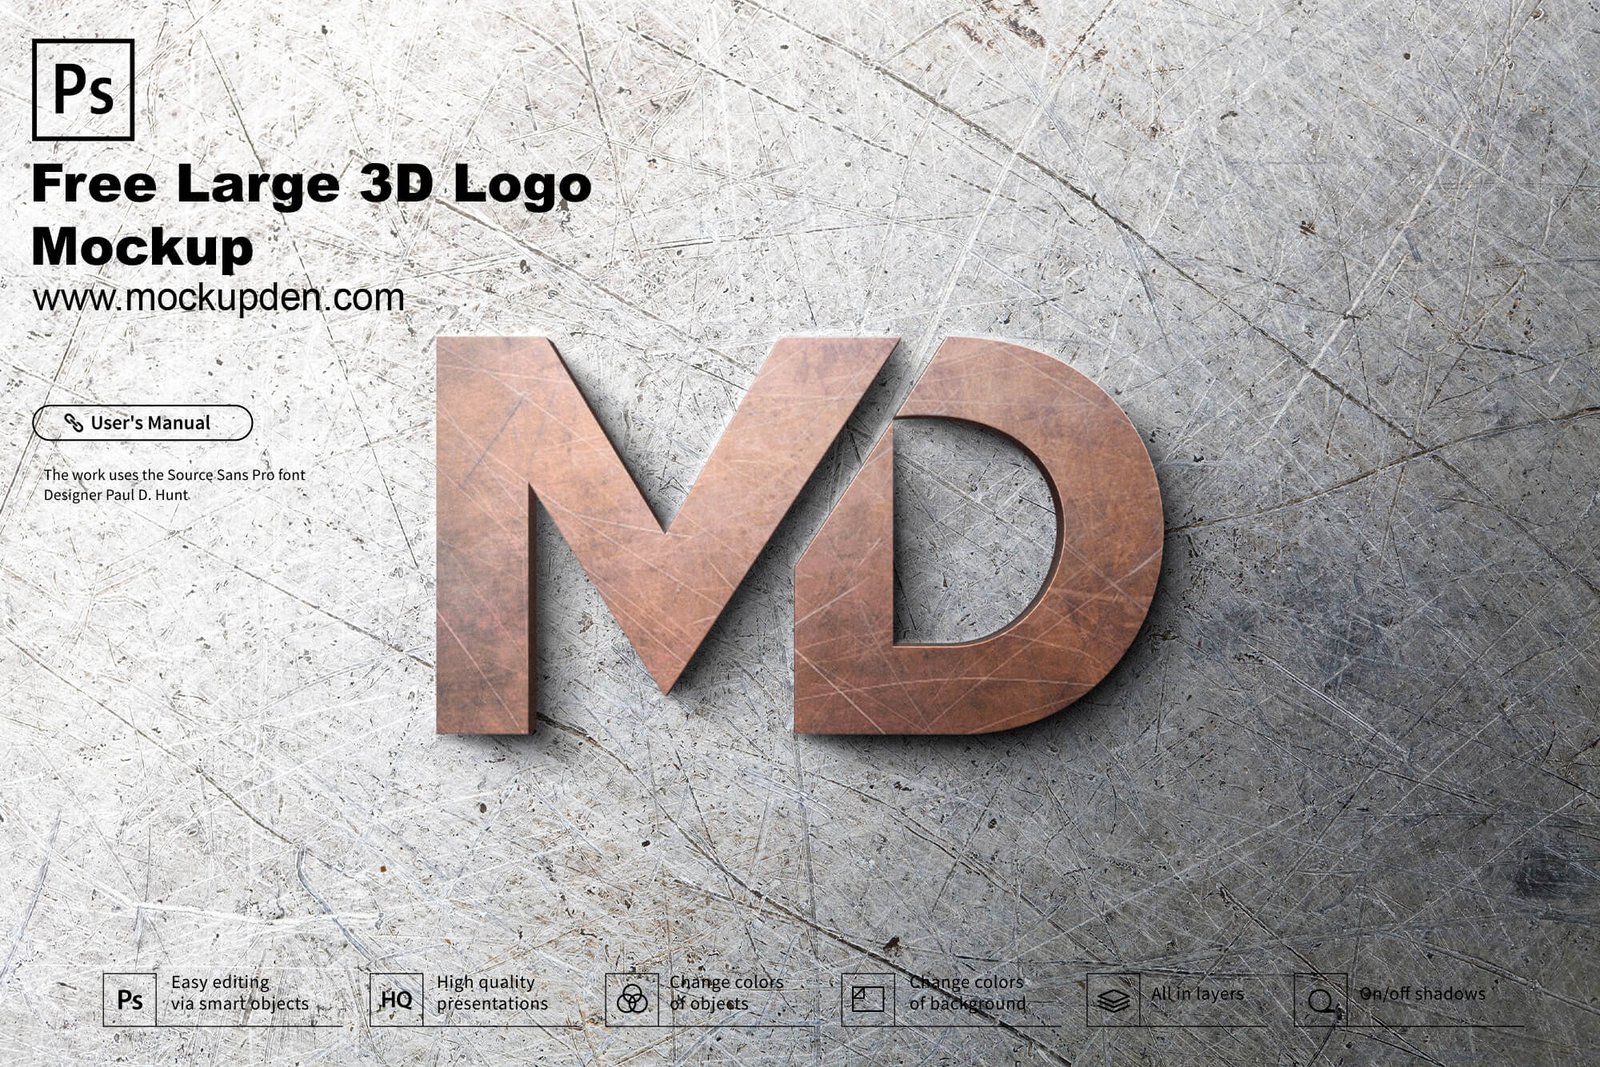 Free Large 3D Logo Mockup PSD Template